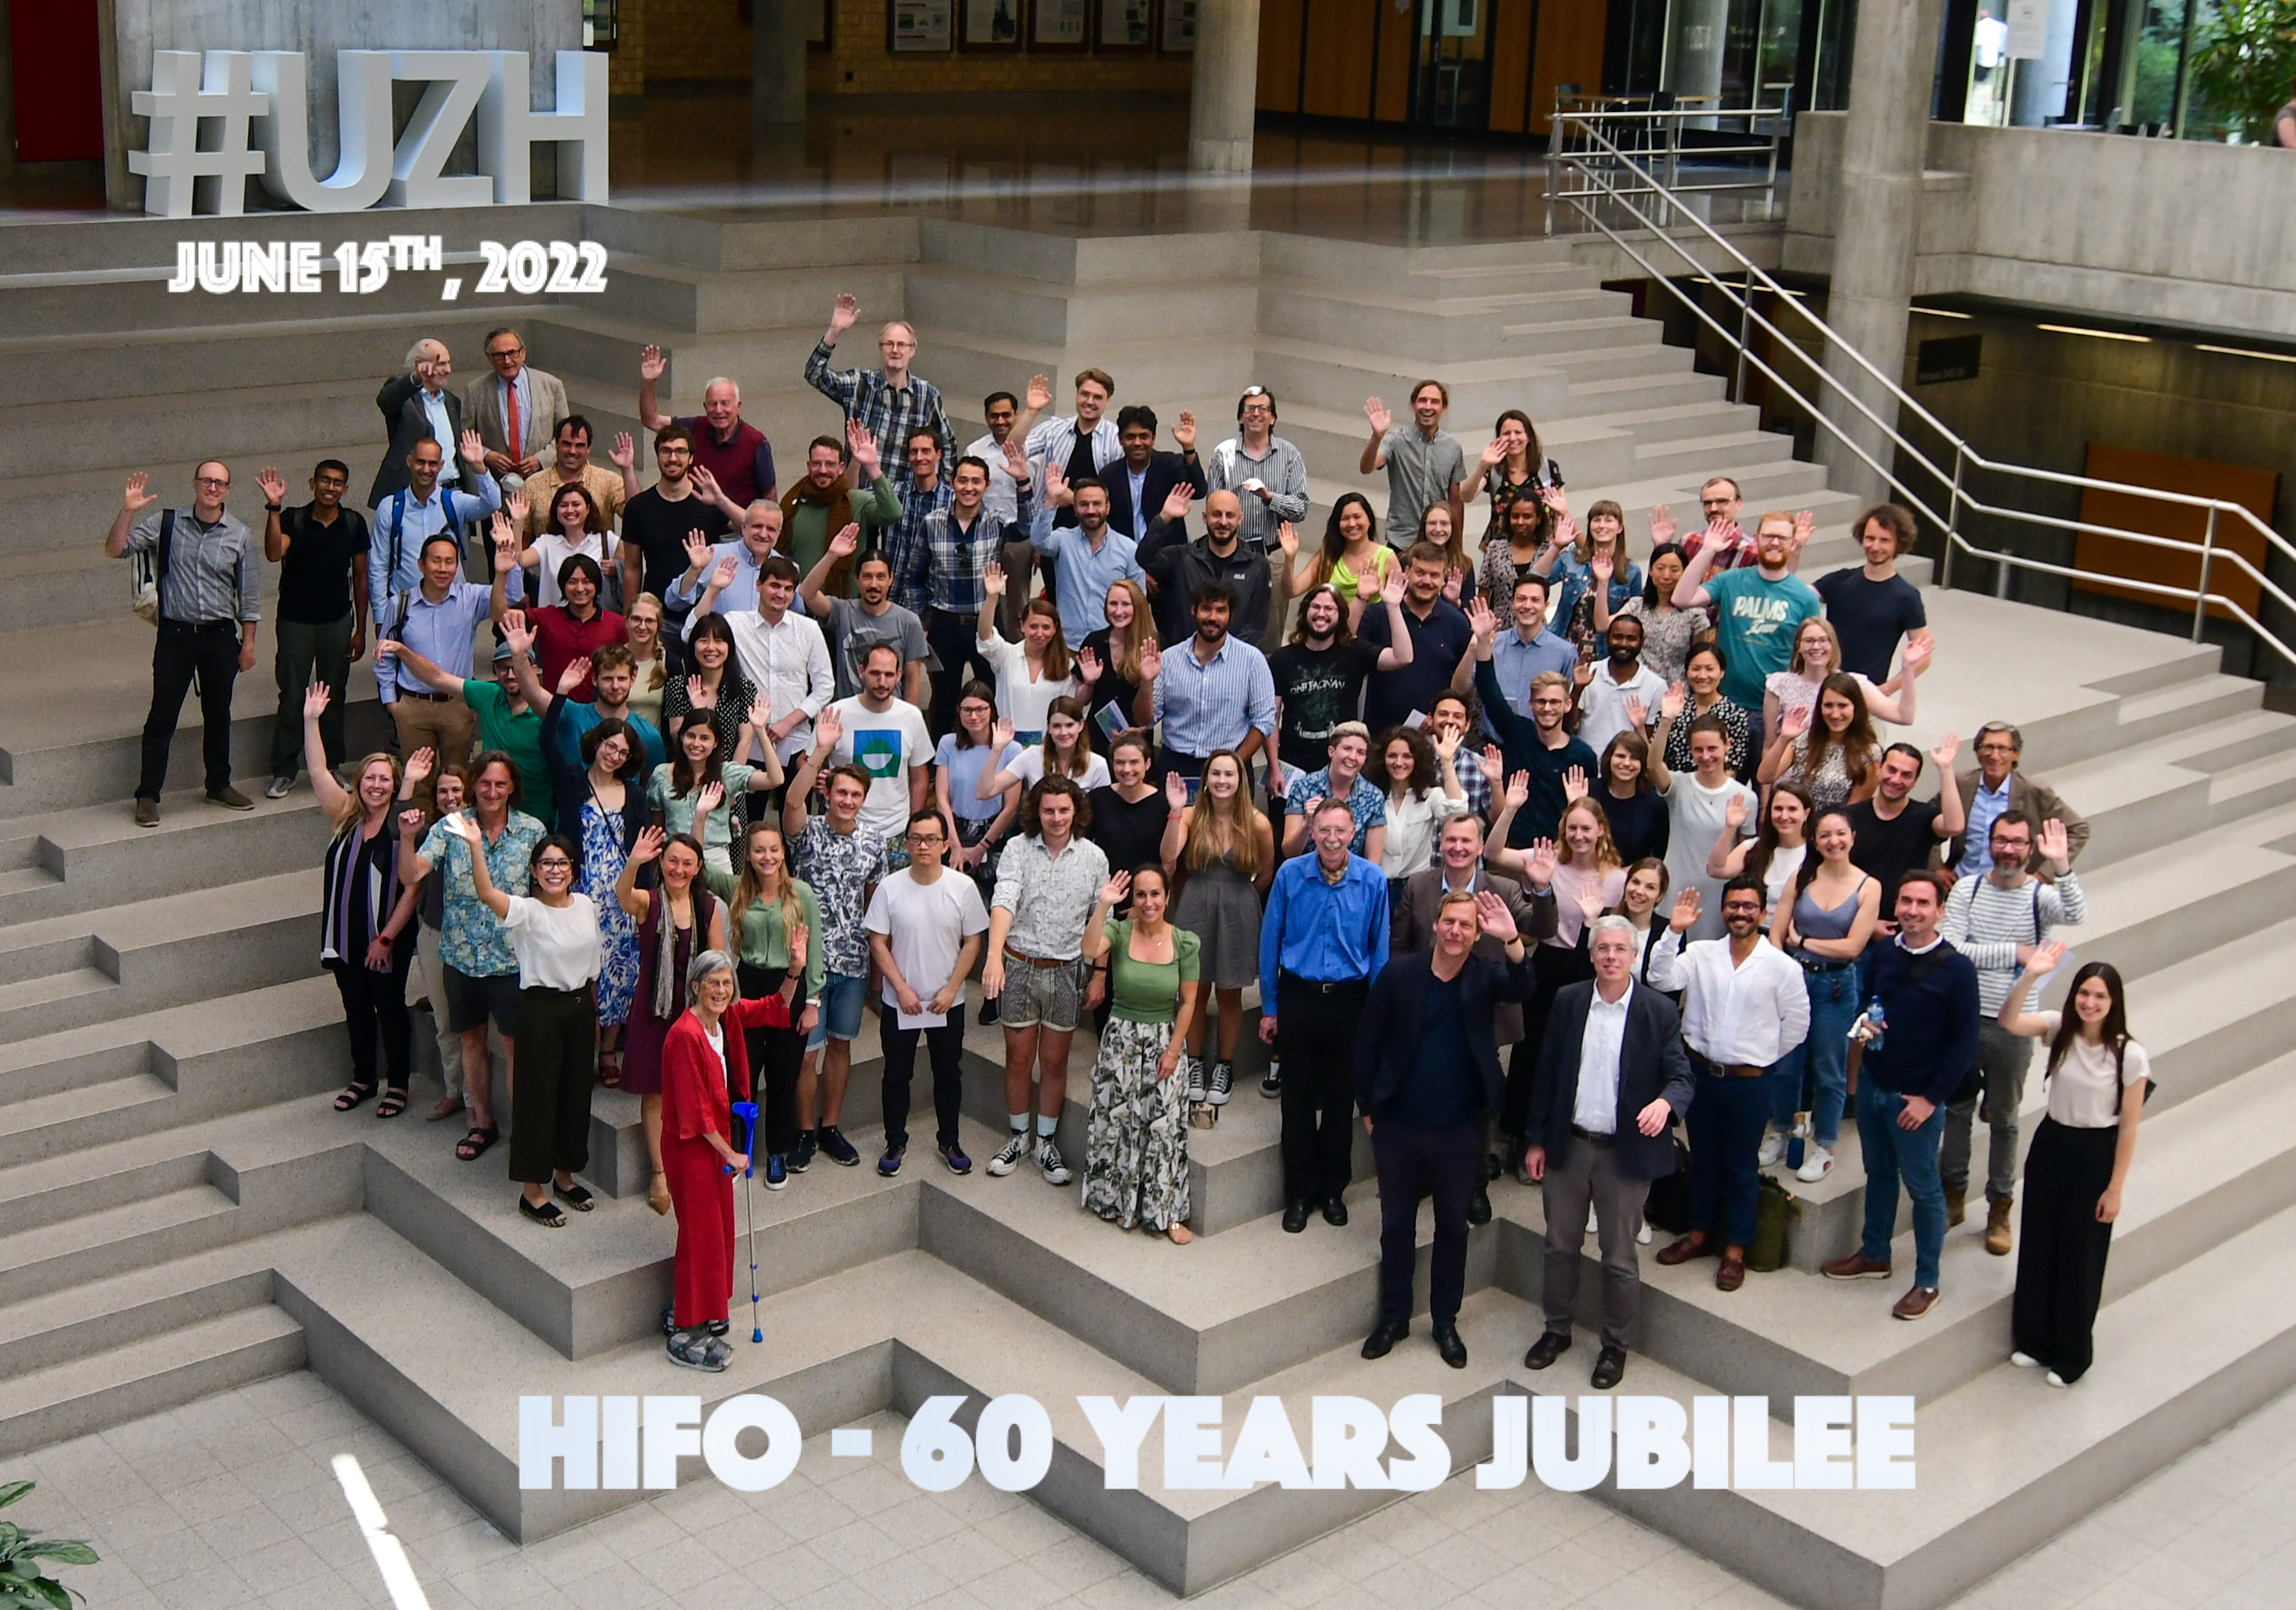 Hifo jubilee - 60 years